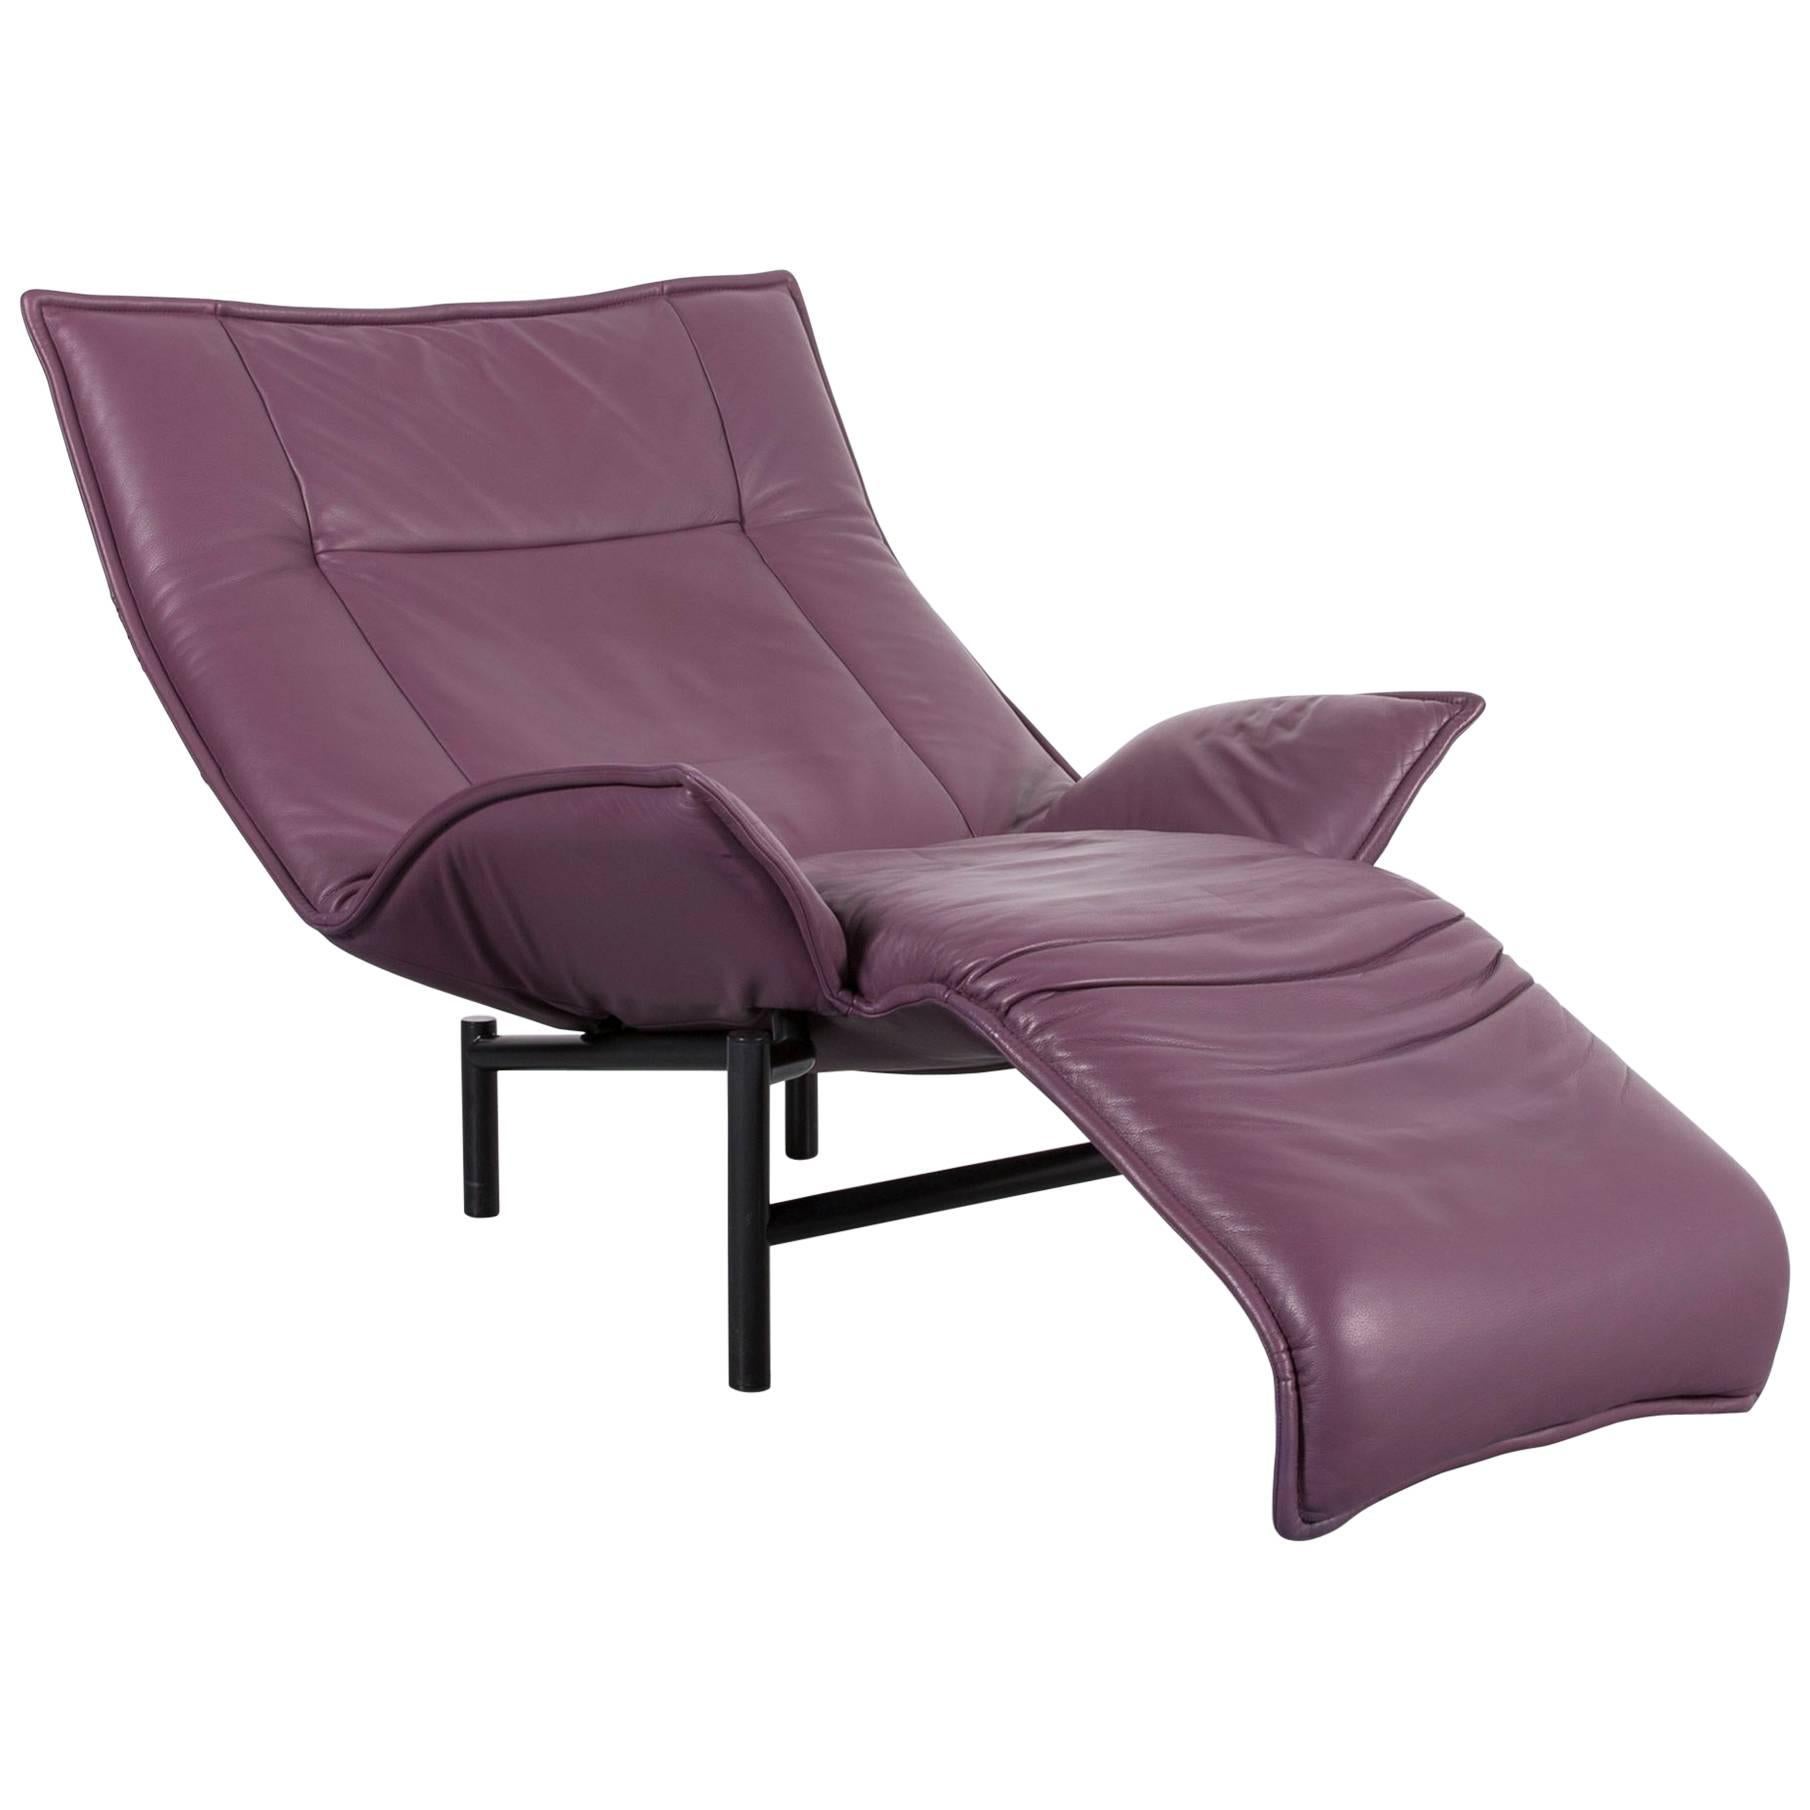 Cassina Veranda Designer Leather Armchair in Purple with Recliner Function